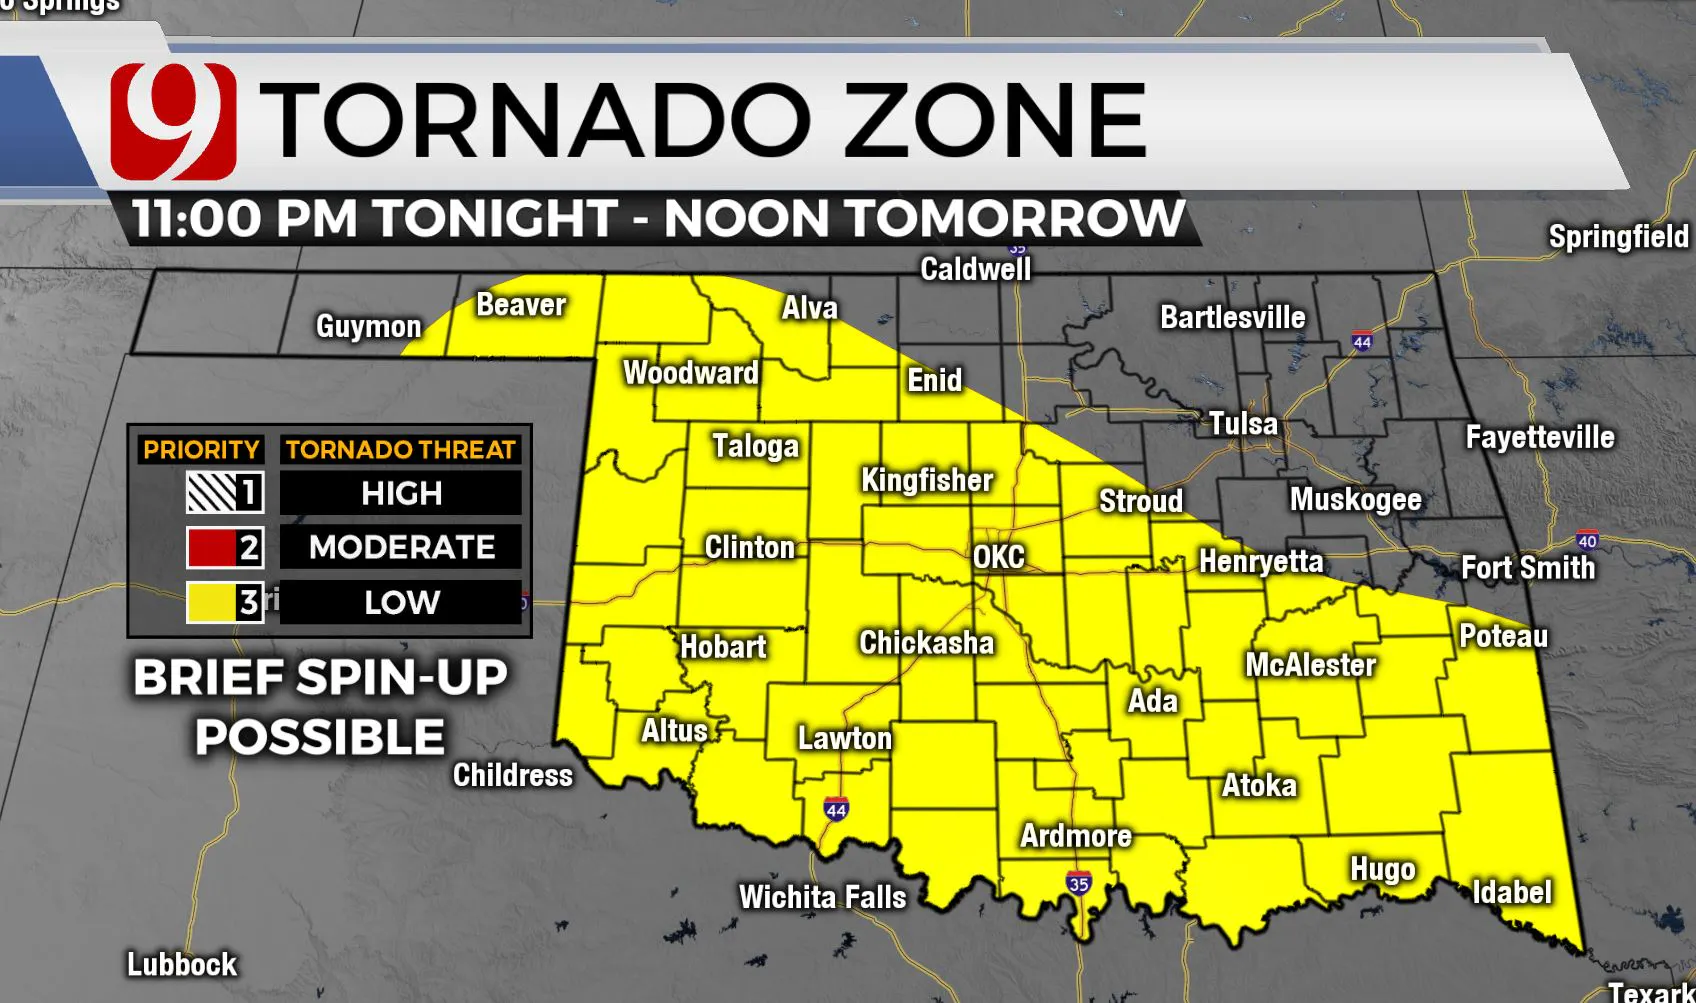 Tornado zone Monday night through Tuesday morning.